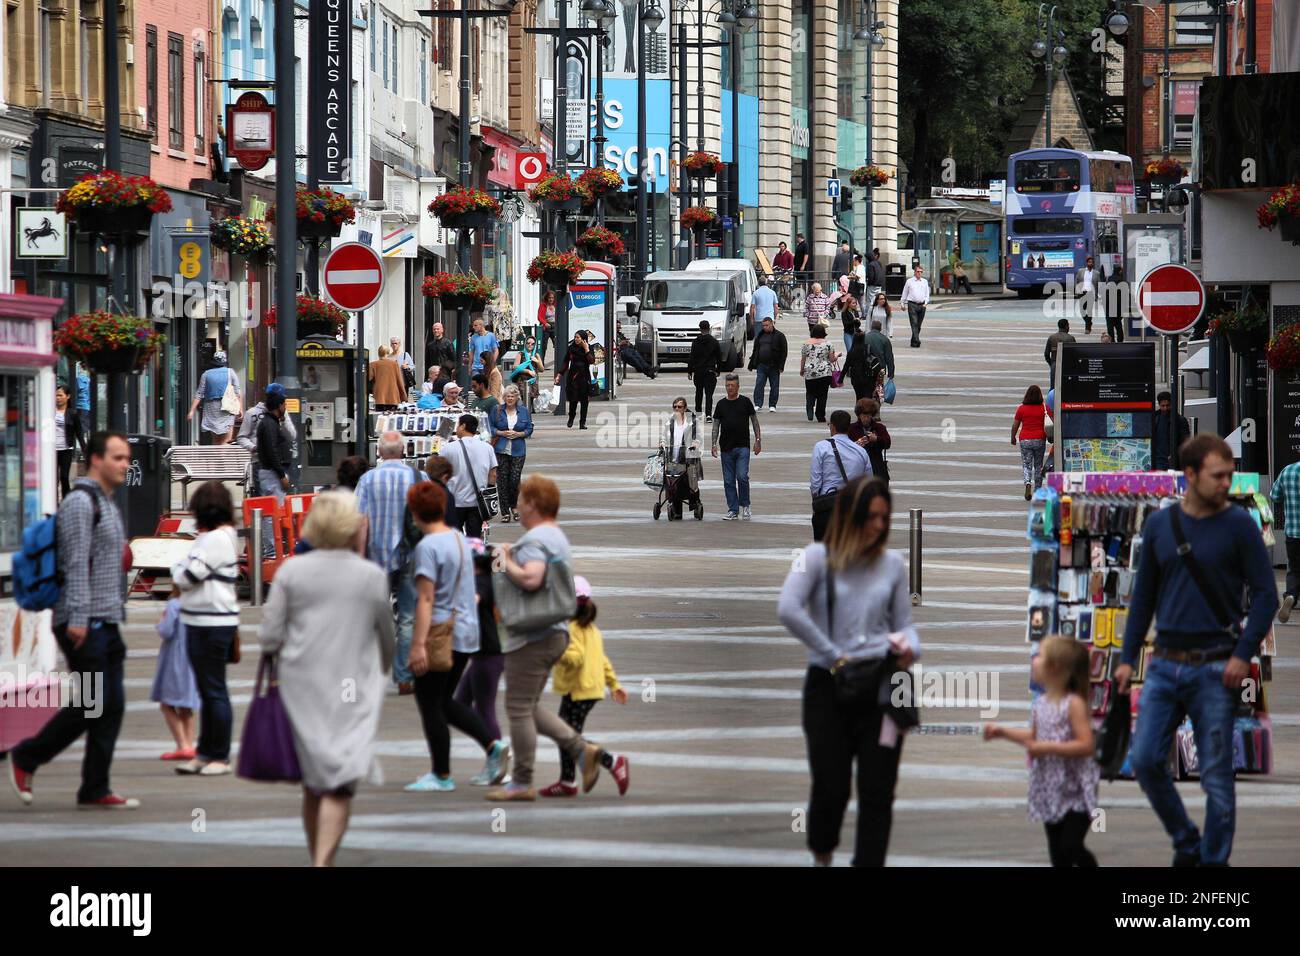 LEEDS, UK - JULY 12, 2016: People shop at Briggate street in downtown Leeds, UK. Leeds urban area has 1.78 million population. Stock Photo